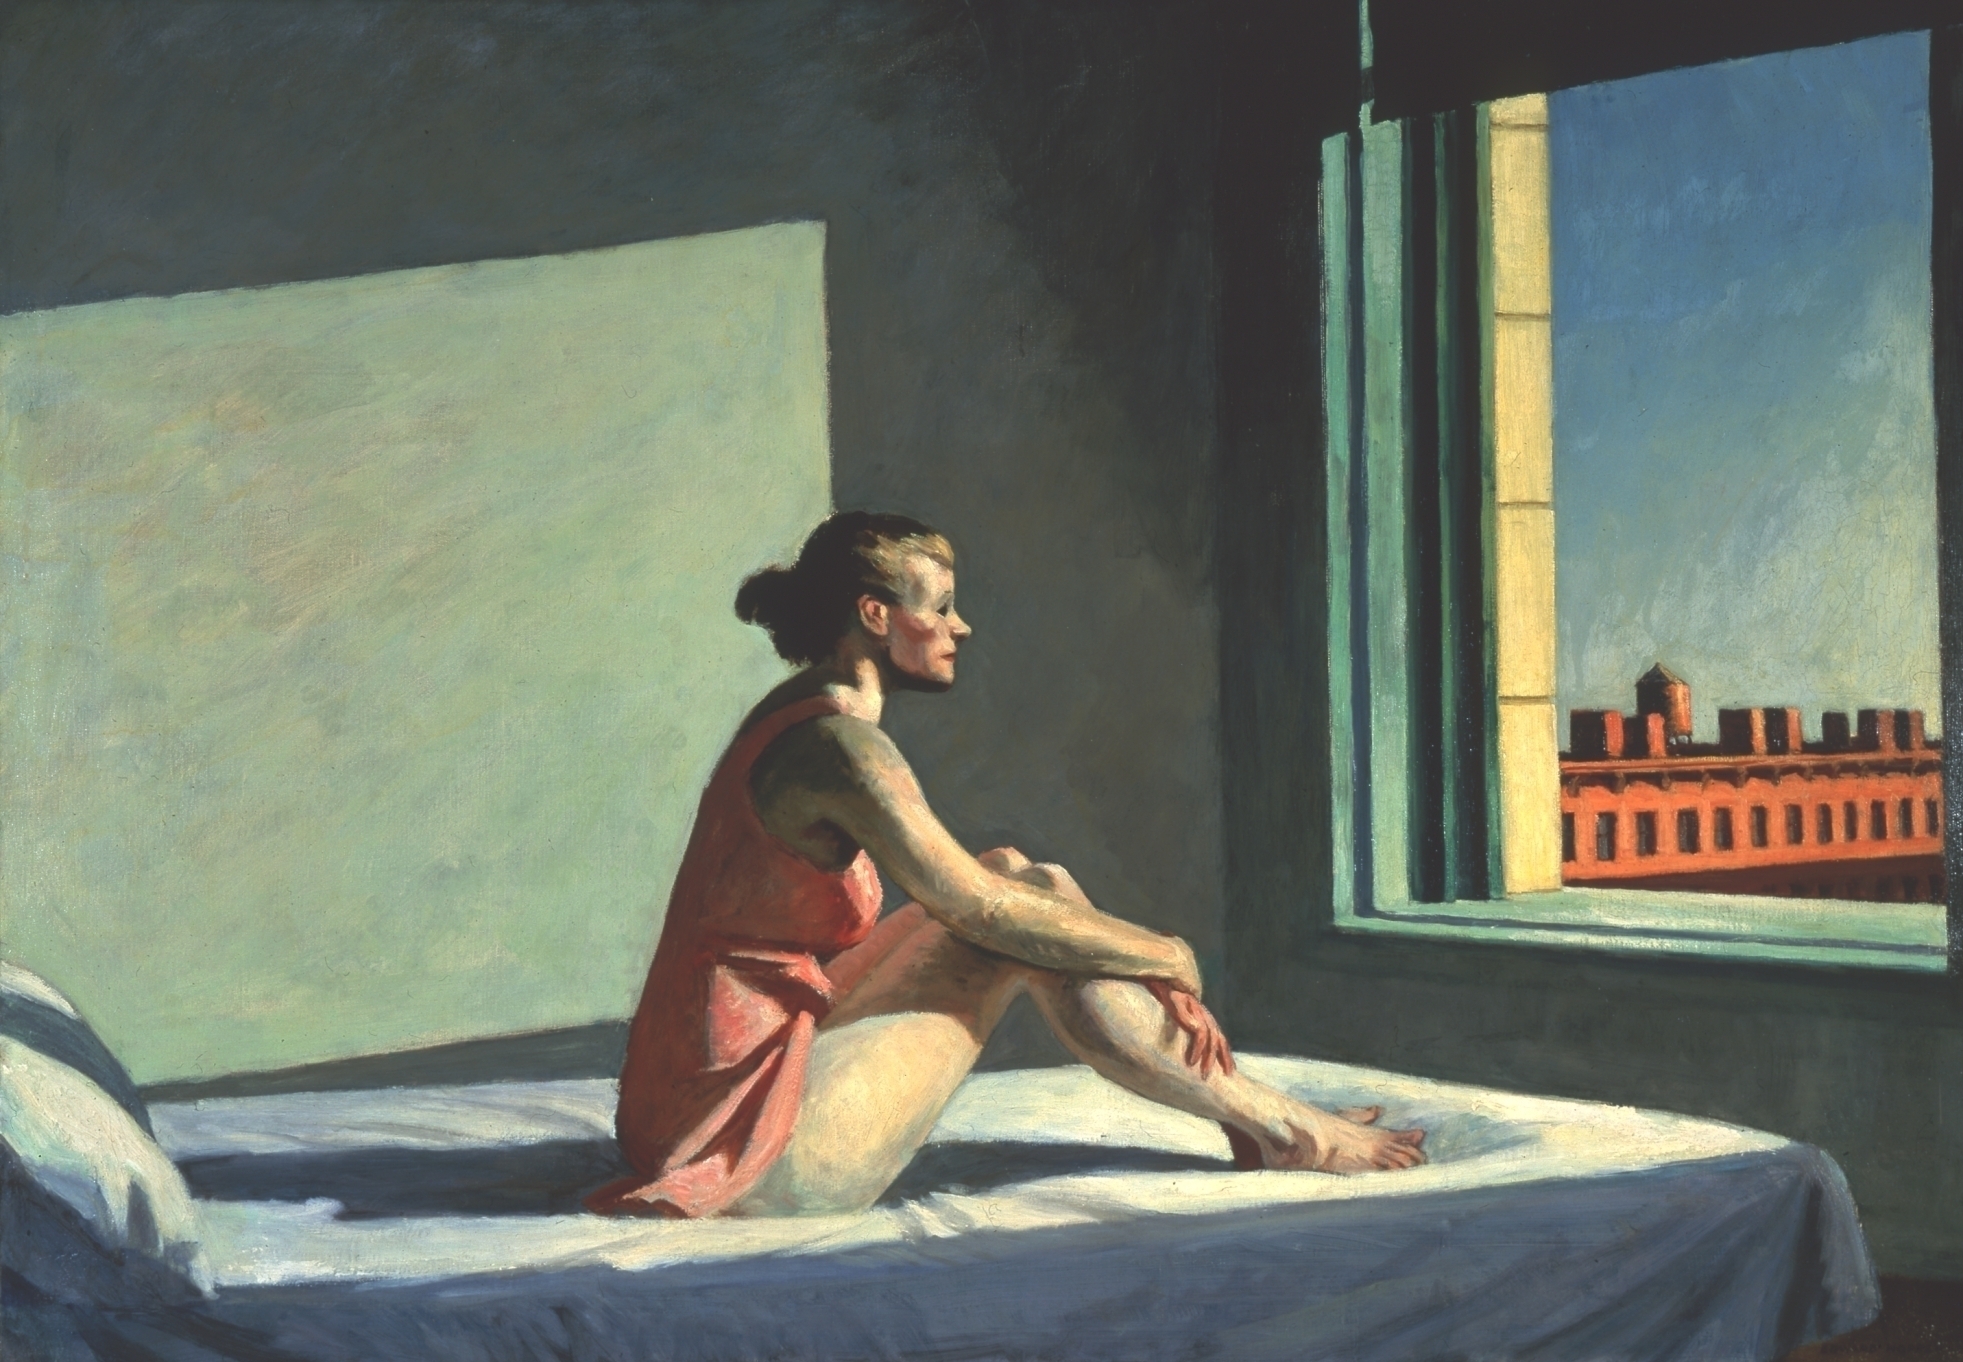 Morning Sun by Edward Hopper - 1952 - 101.98 x 71.5 cm Columbus Museum of Art